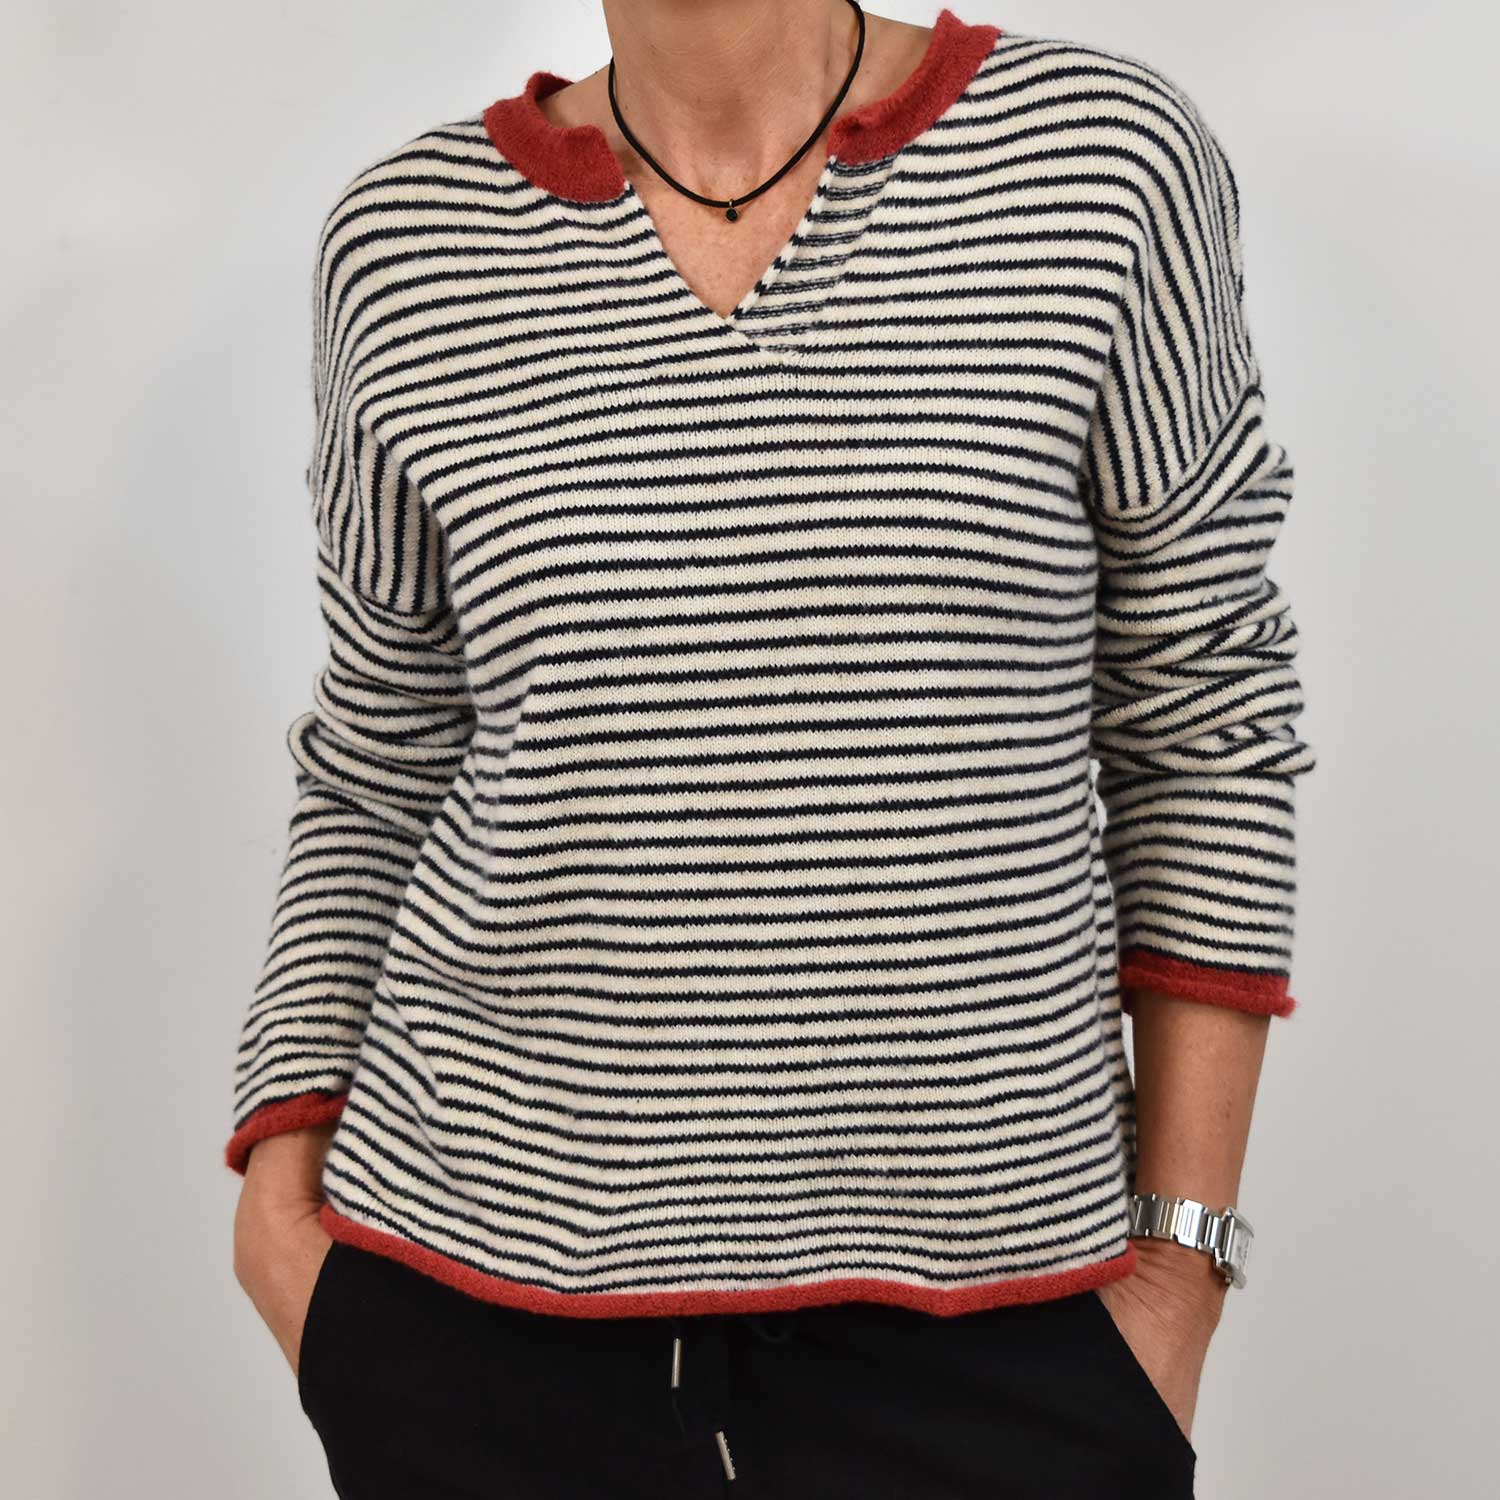 White striped peak sweater